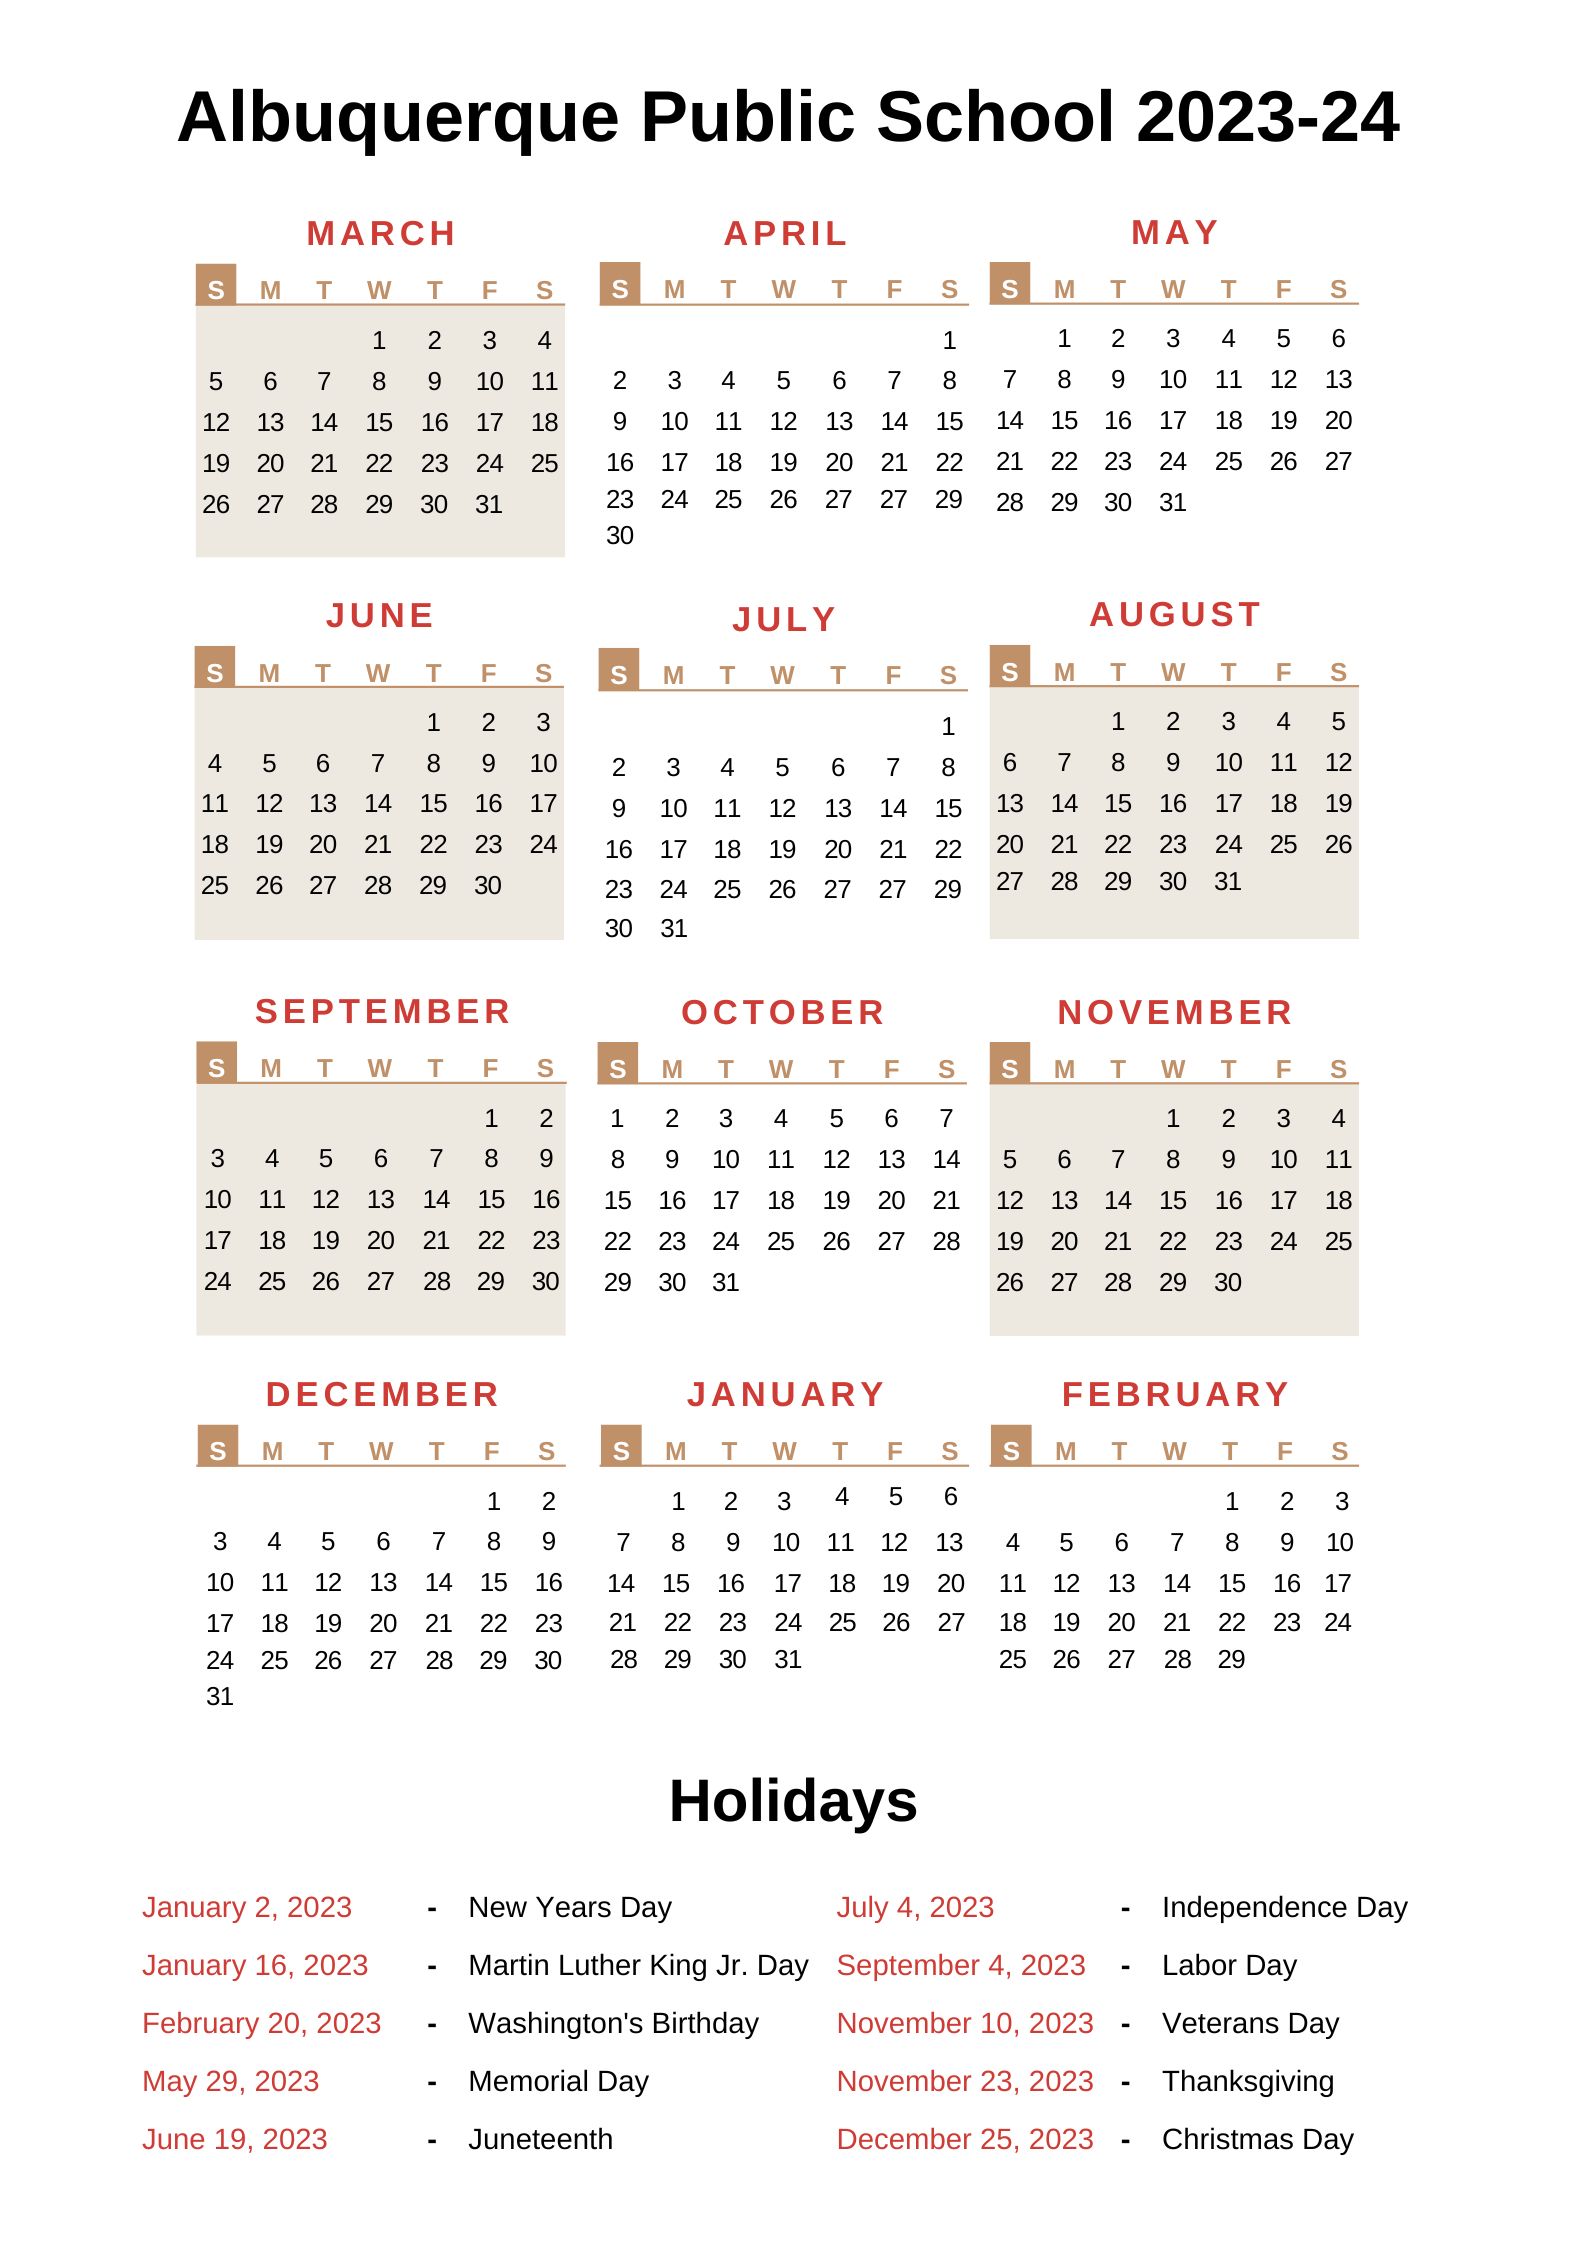 Albuquerque Public Schools Calendar [APS] 202324 with Holidays